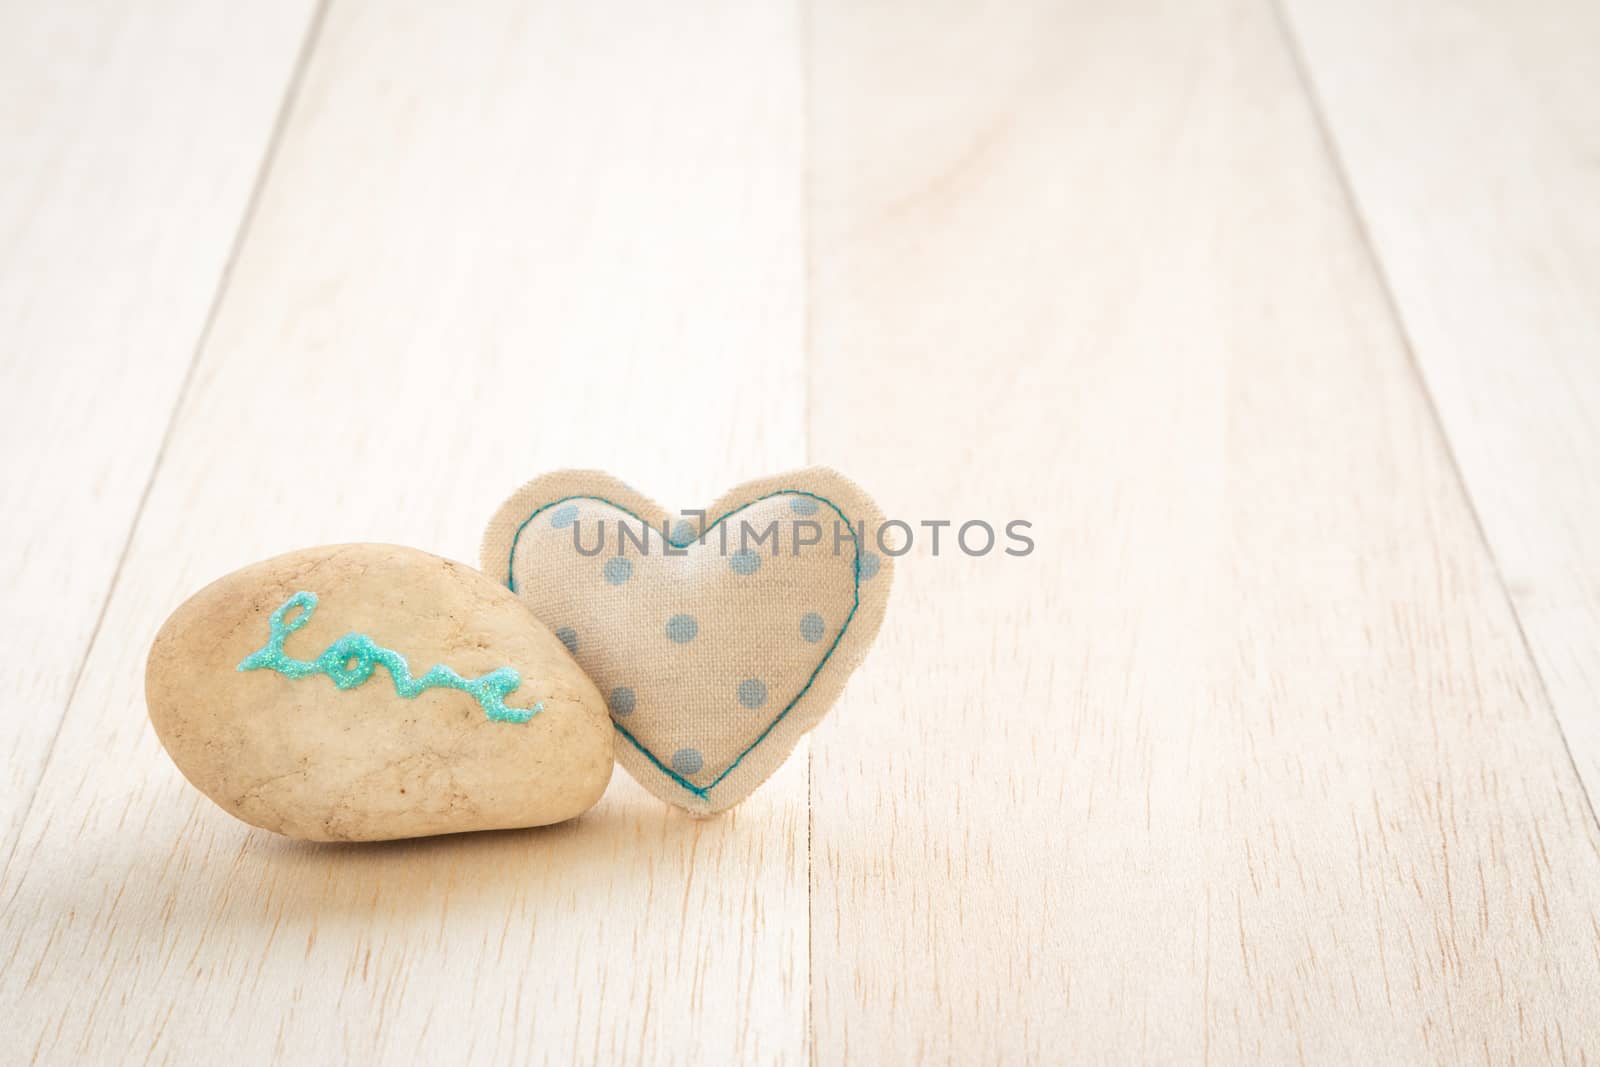 Cute handmade heart and glitter love word on stone by vinnstock